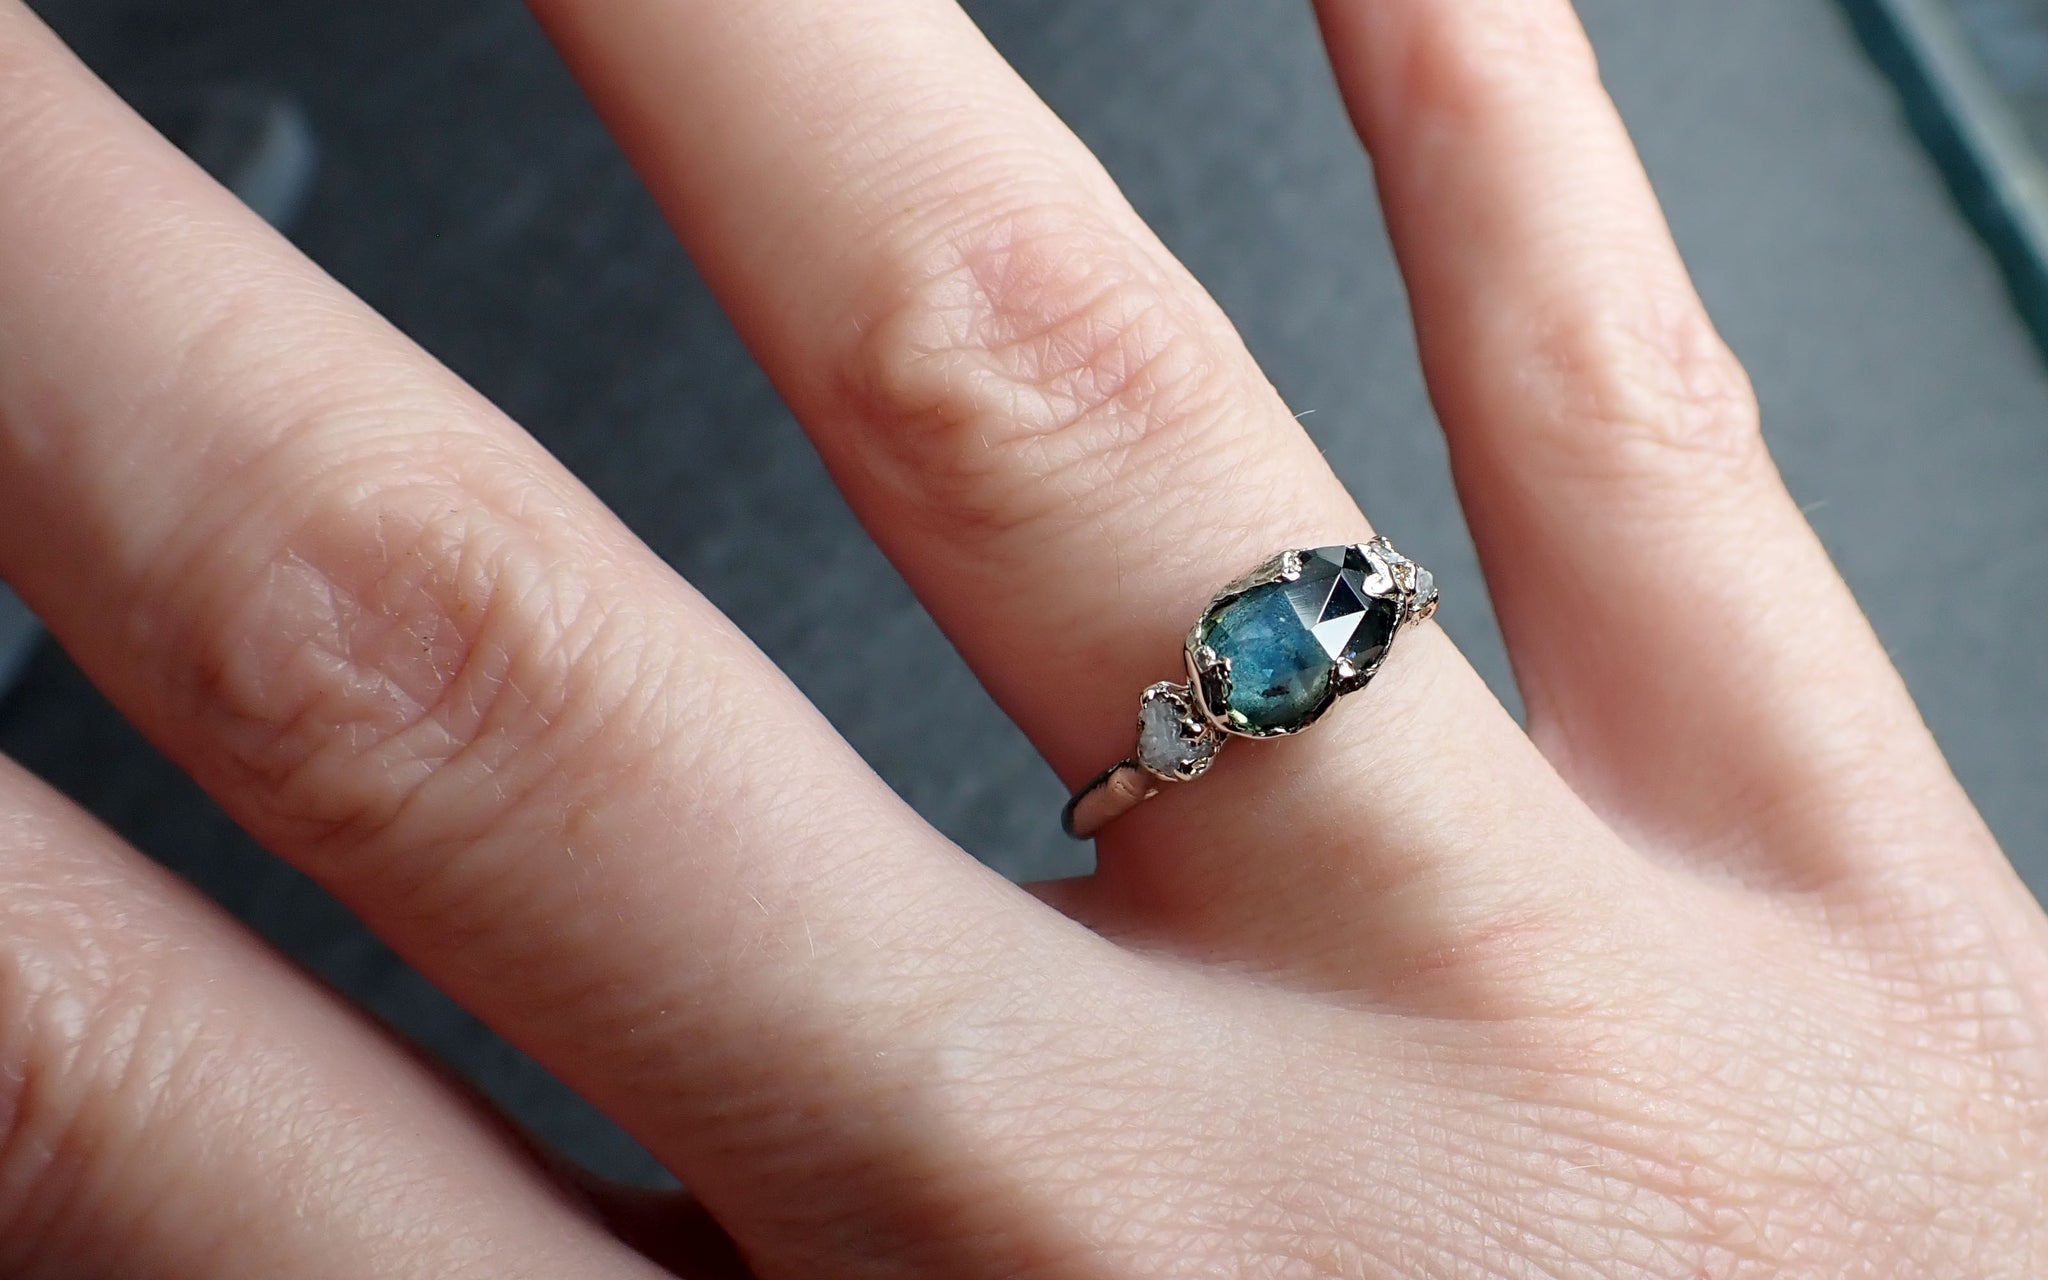 fancy cut montana sapphire diamond 14k white gold engagement ring wedding ring blue gemstone ring multi stone ring 2649 Alternative Engagement